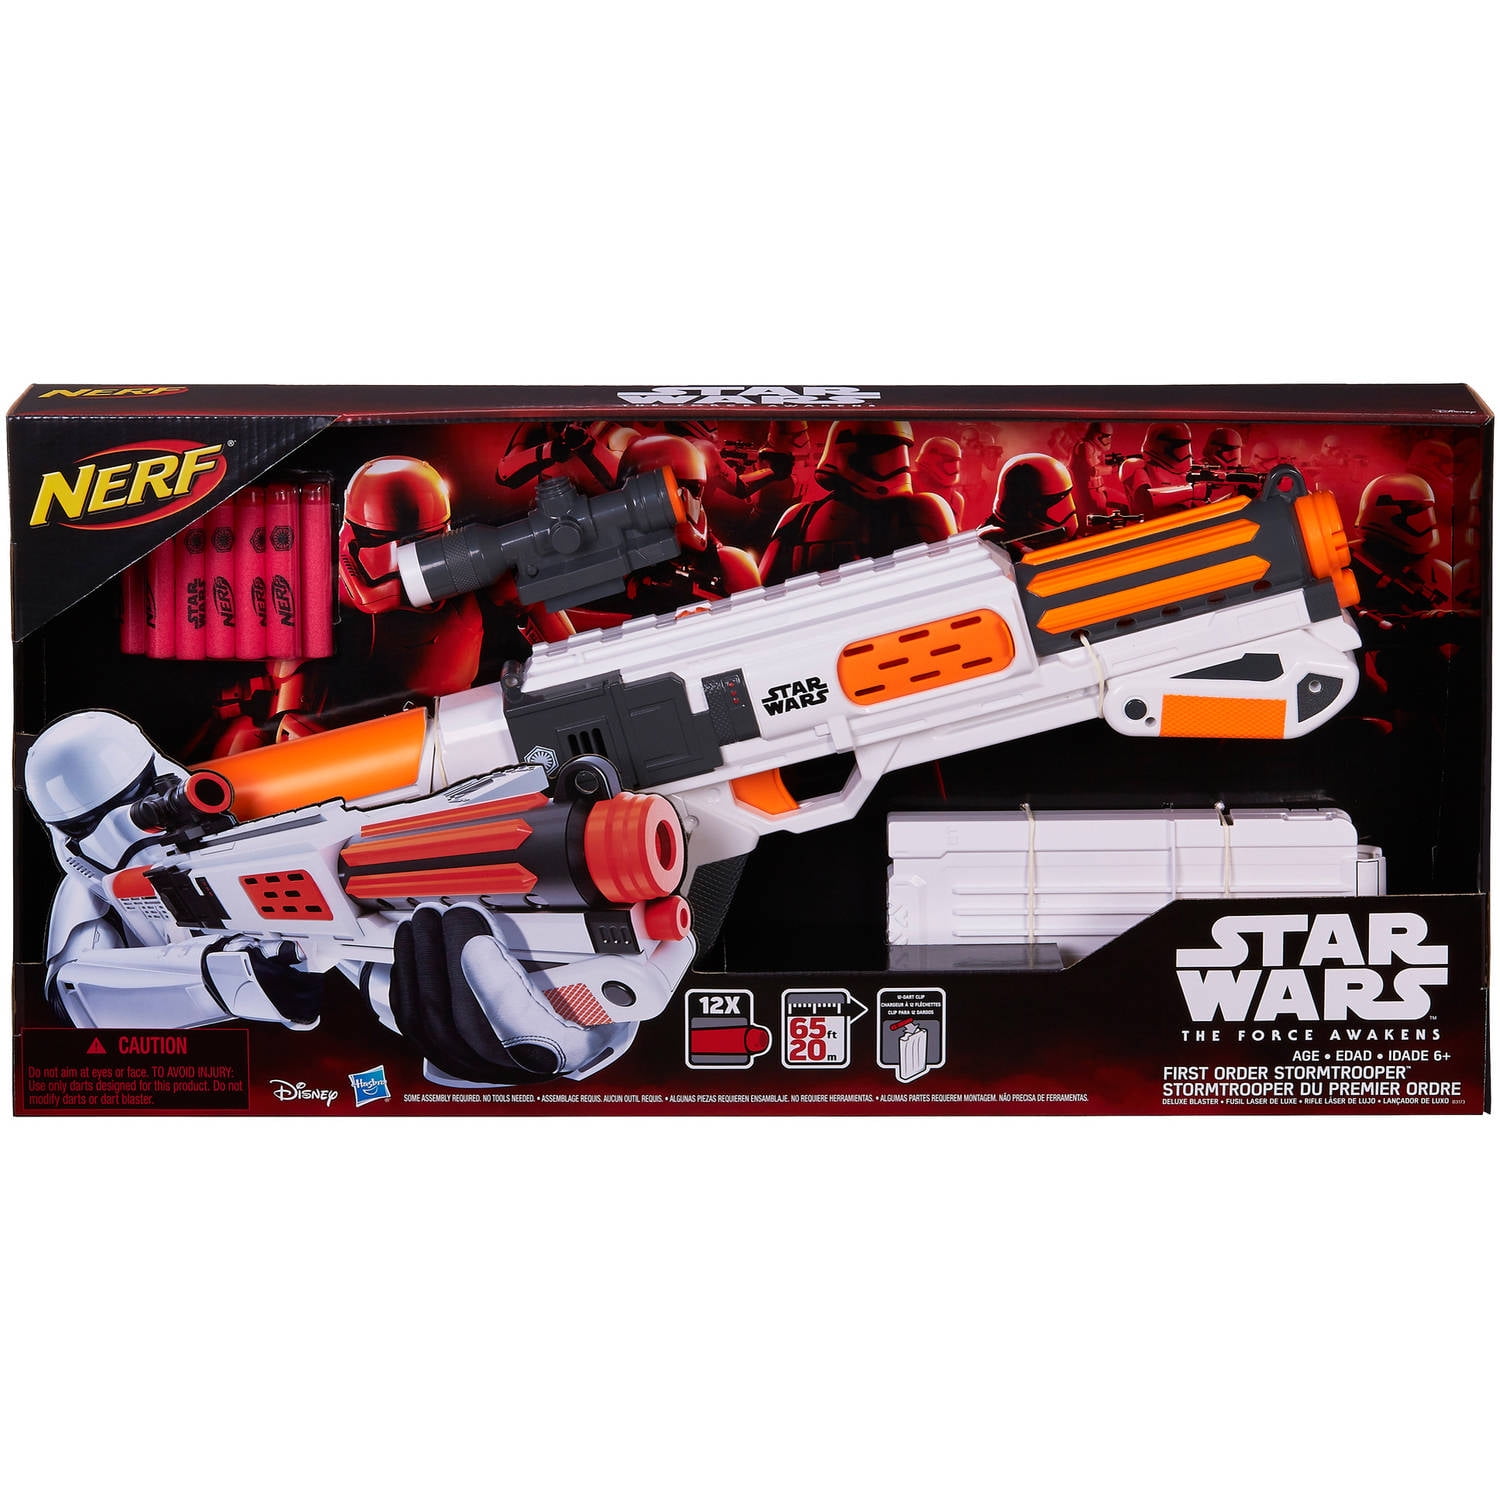 stormtrooper gun toy